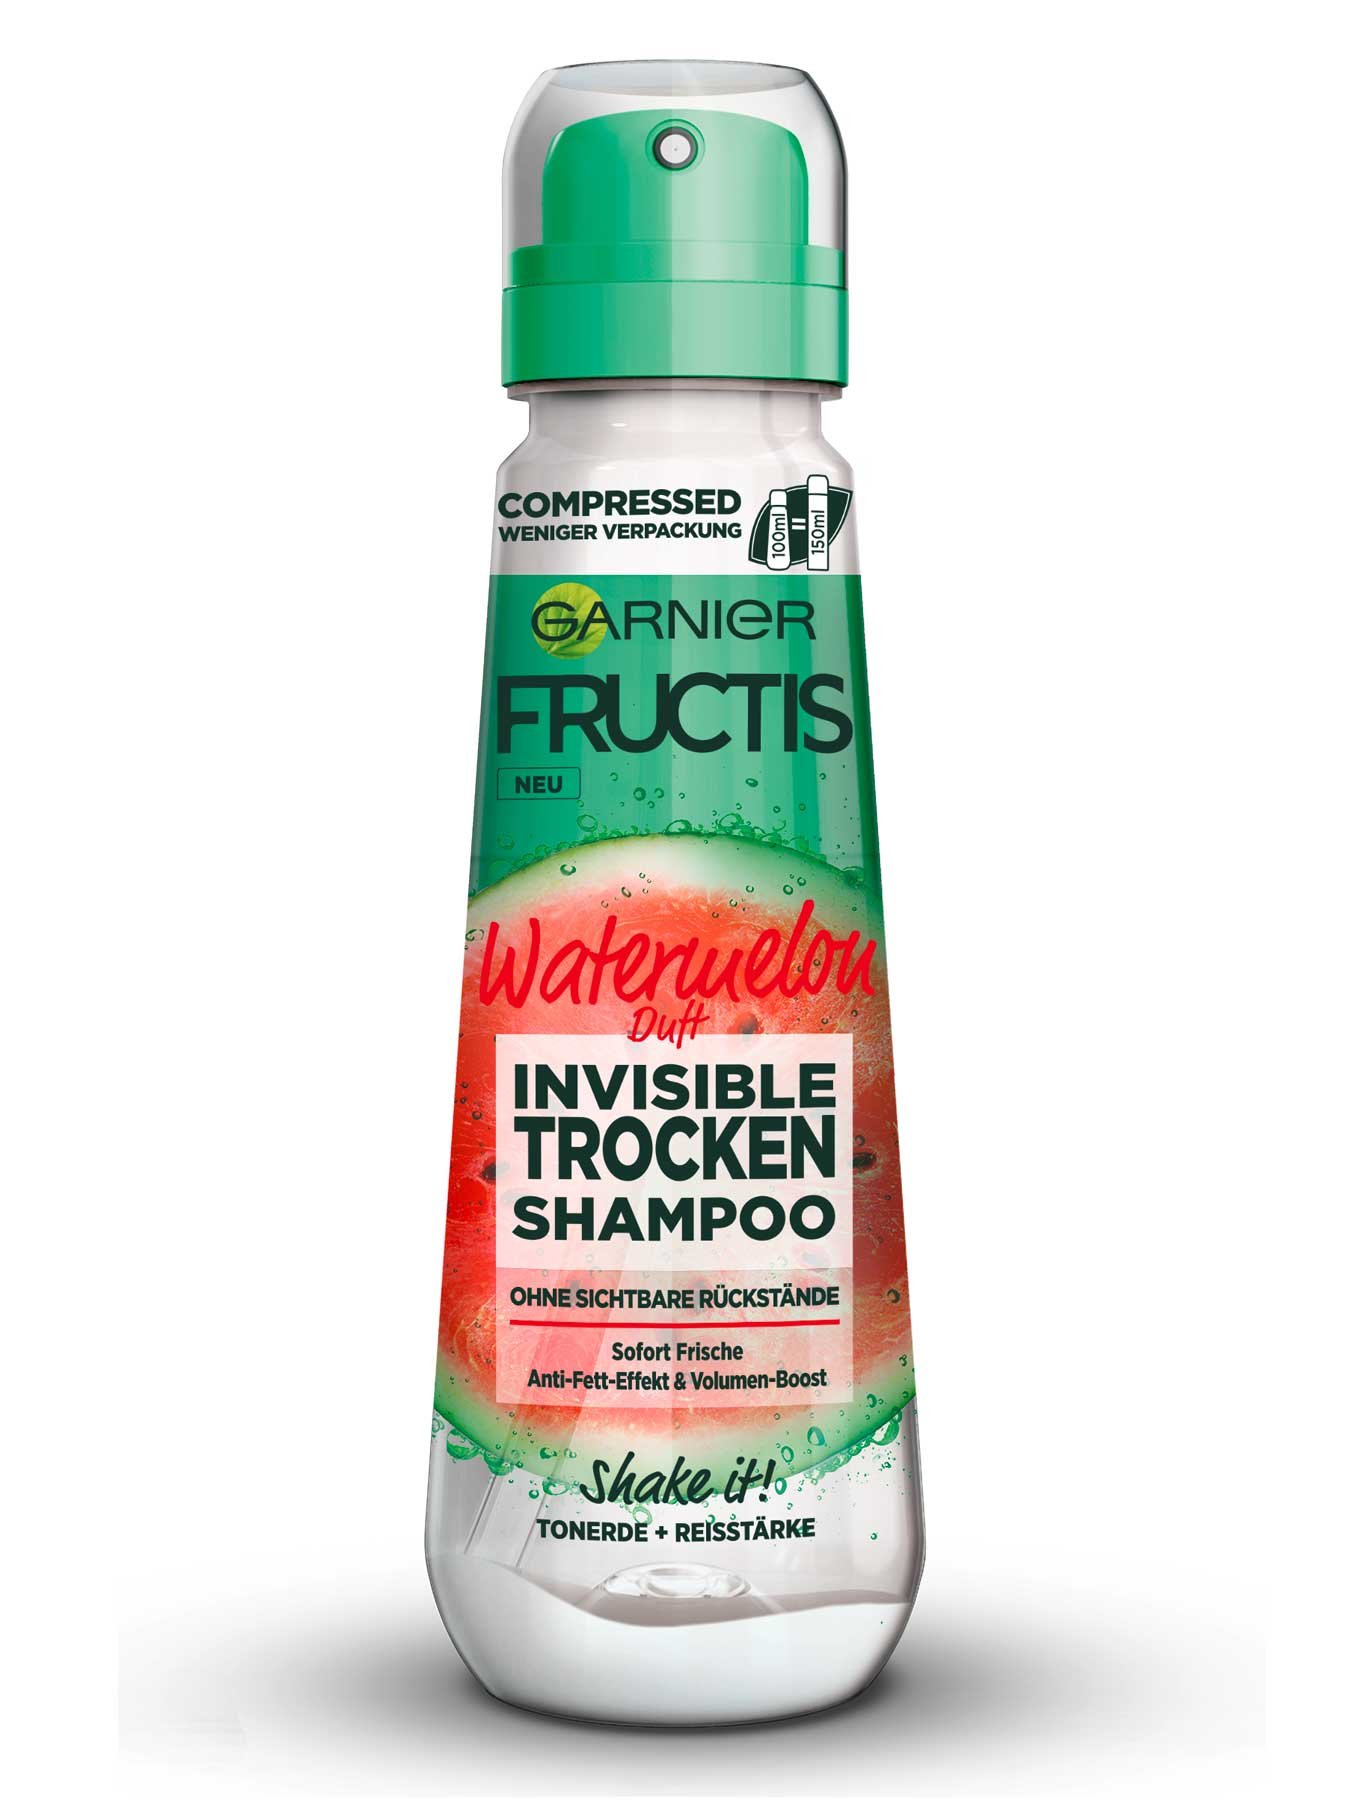 Fructis Invisible Trockenshampoo Watermelon - Produktansicht